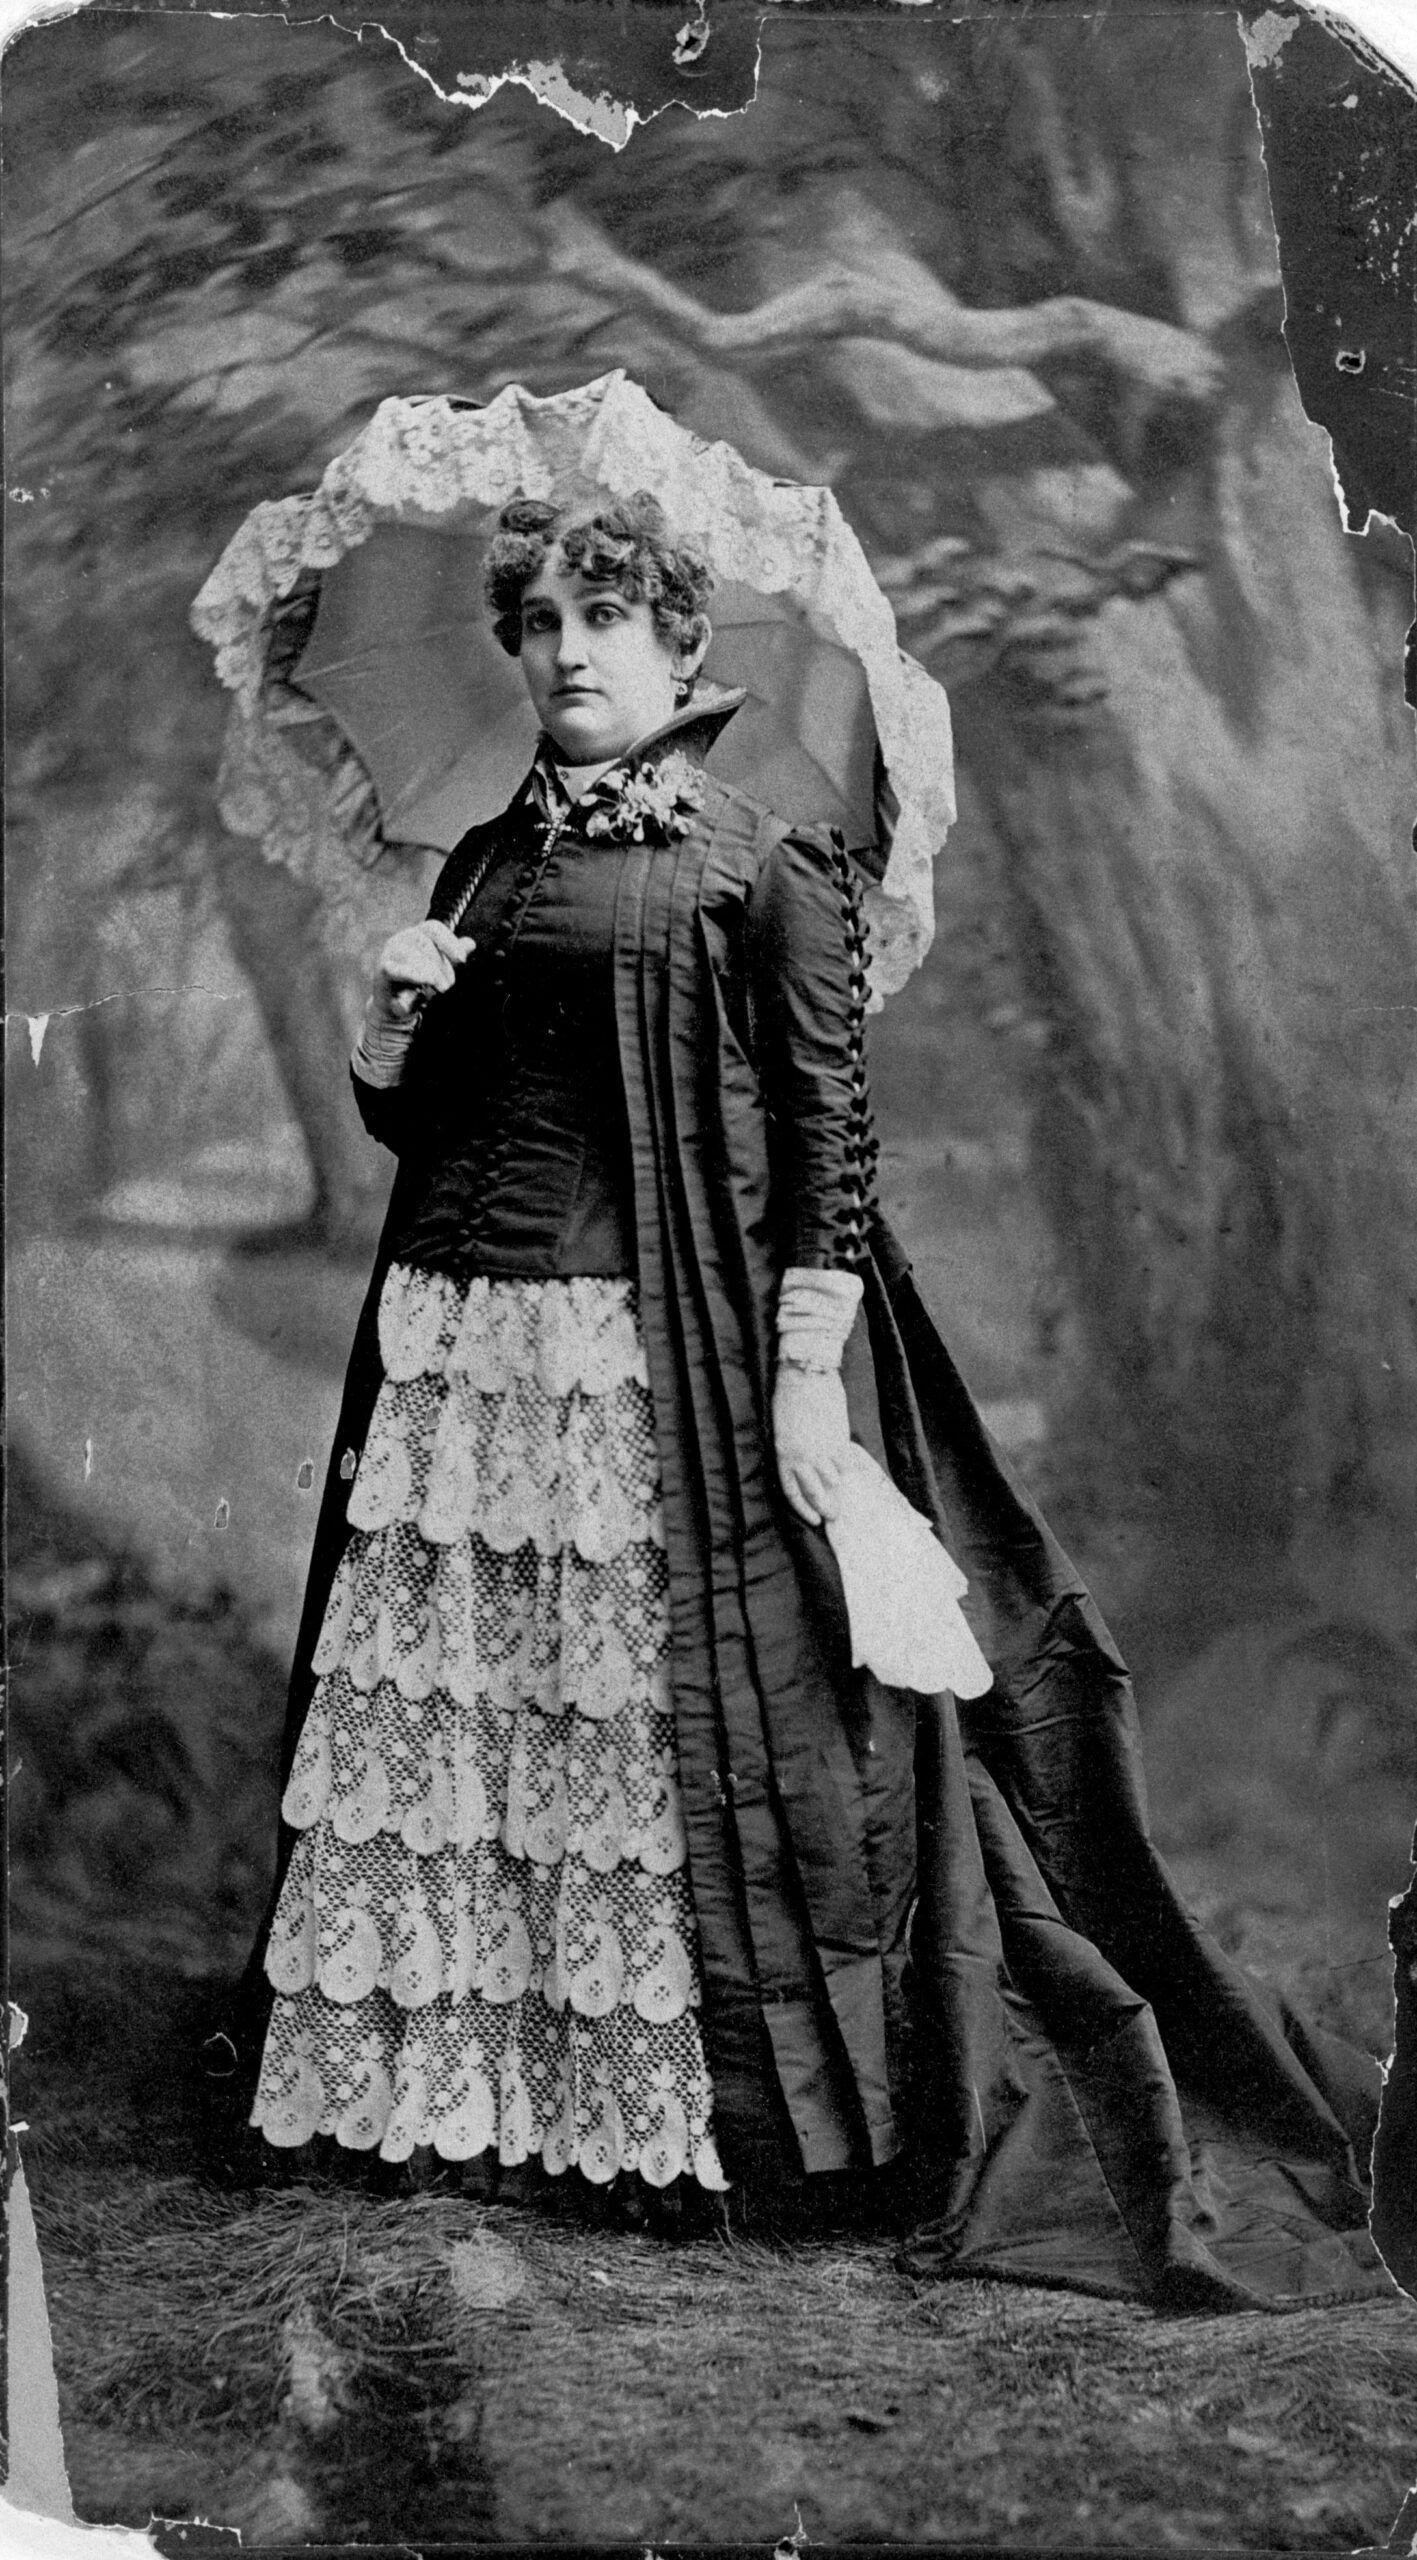 Famous Victorian Women on